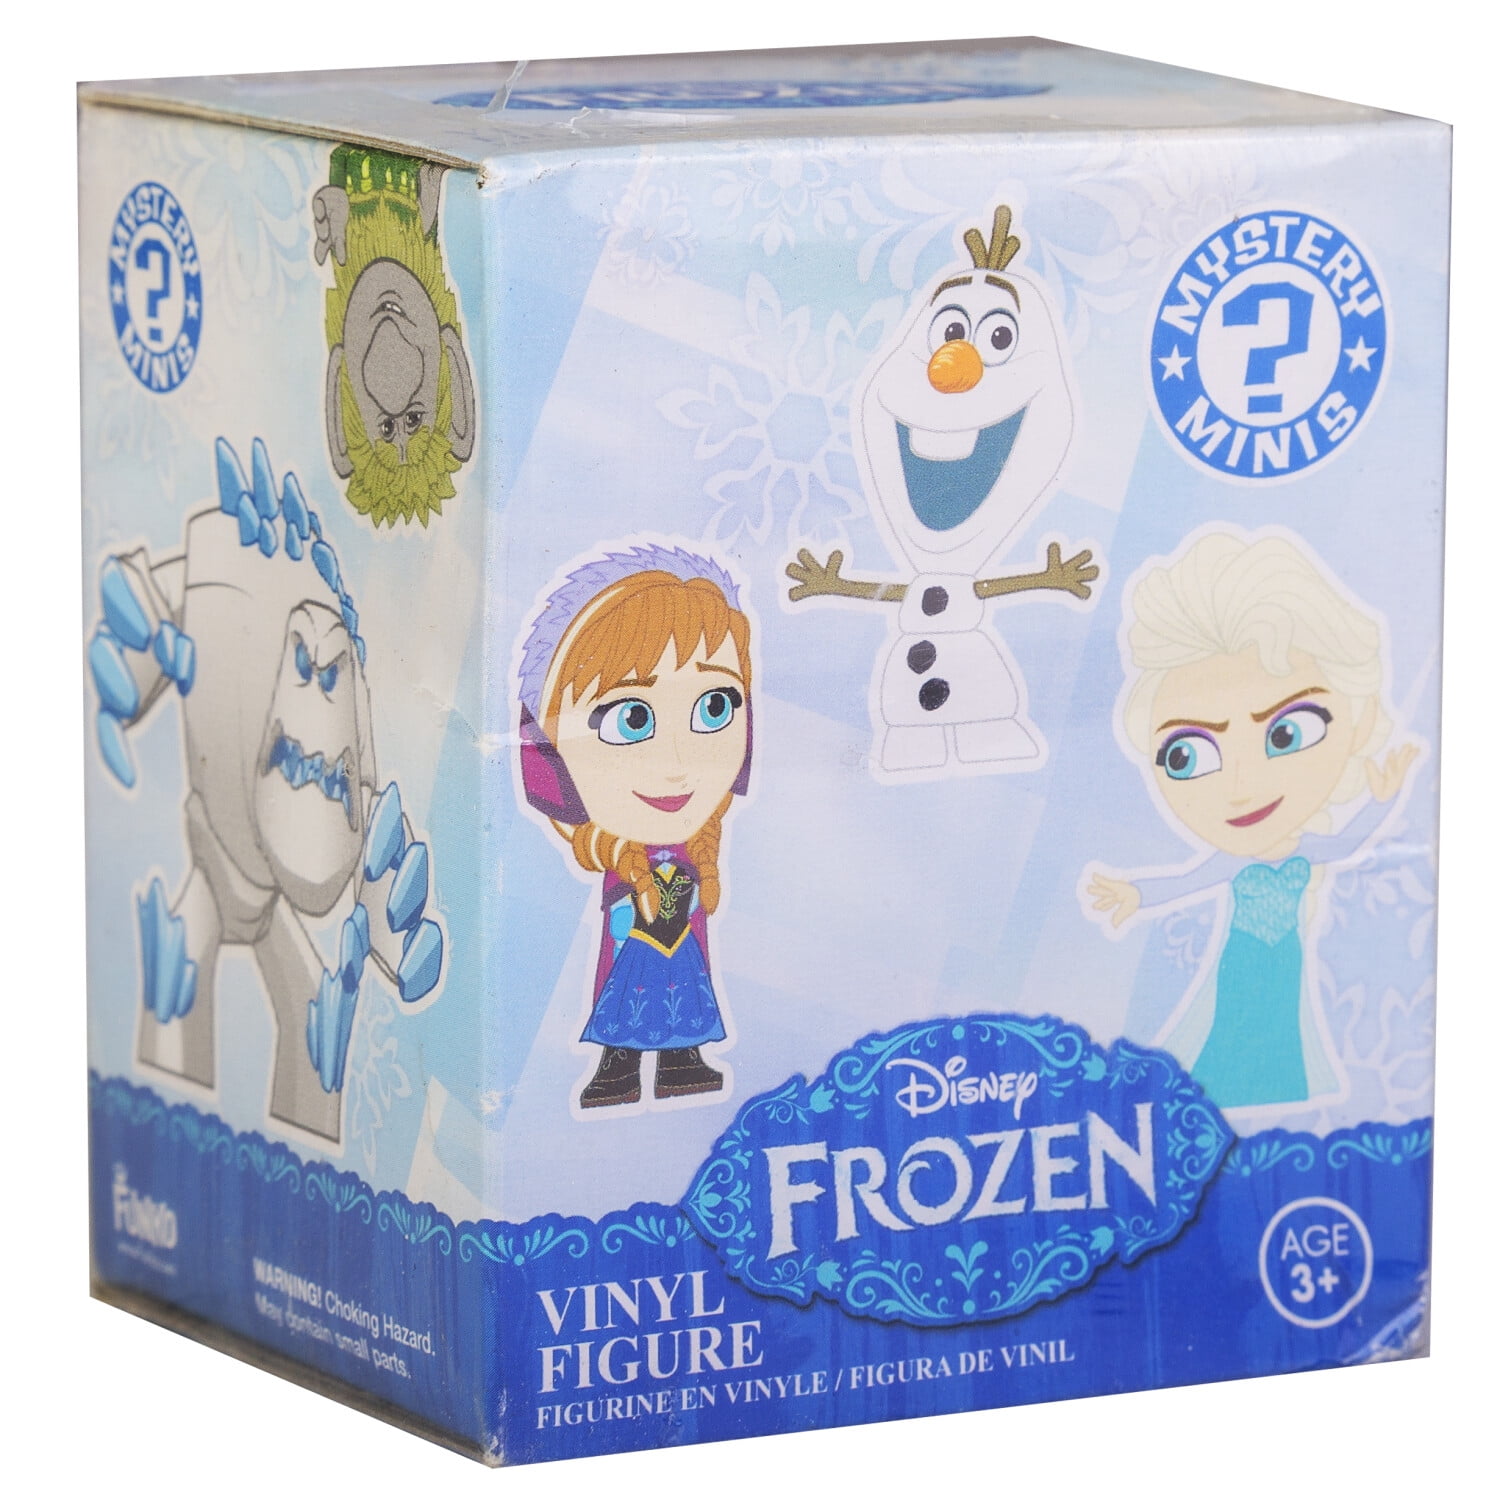 Frozen Disney Funko Mystery Minis Vinyl Figures Elsa Singing 1/12 